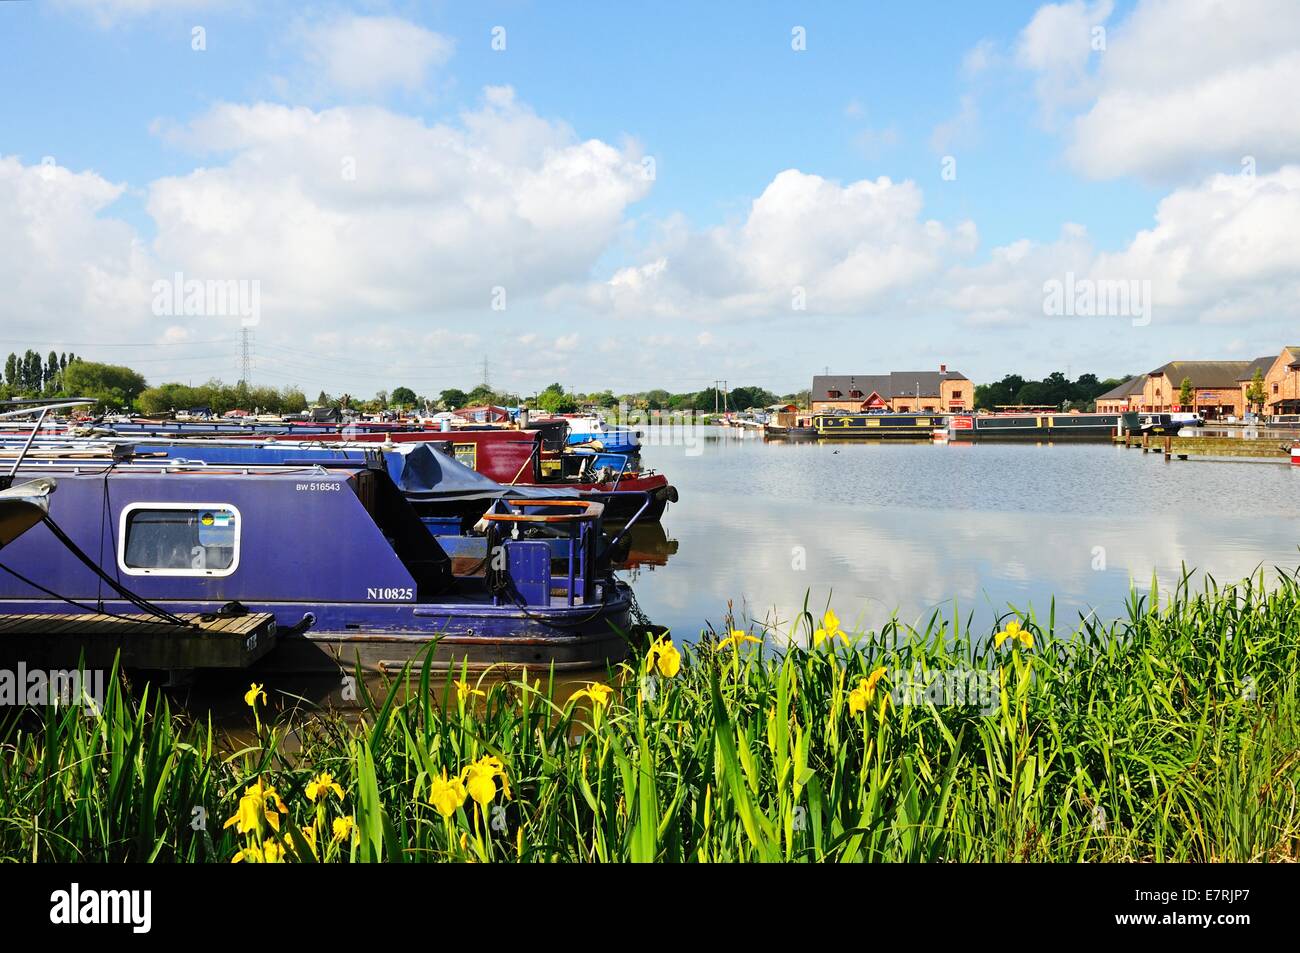 Narrowboats sur leurs amarres dans le bassin du canal, Barton Marina, Barton-under-Needwood, Staffordshire, Angleterre, Royaume-Uni, Europe. Banque D'Images